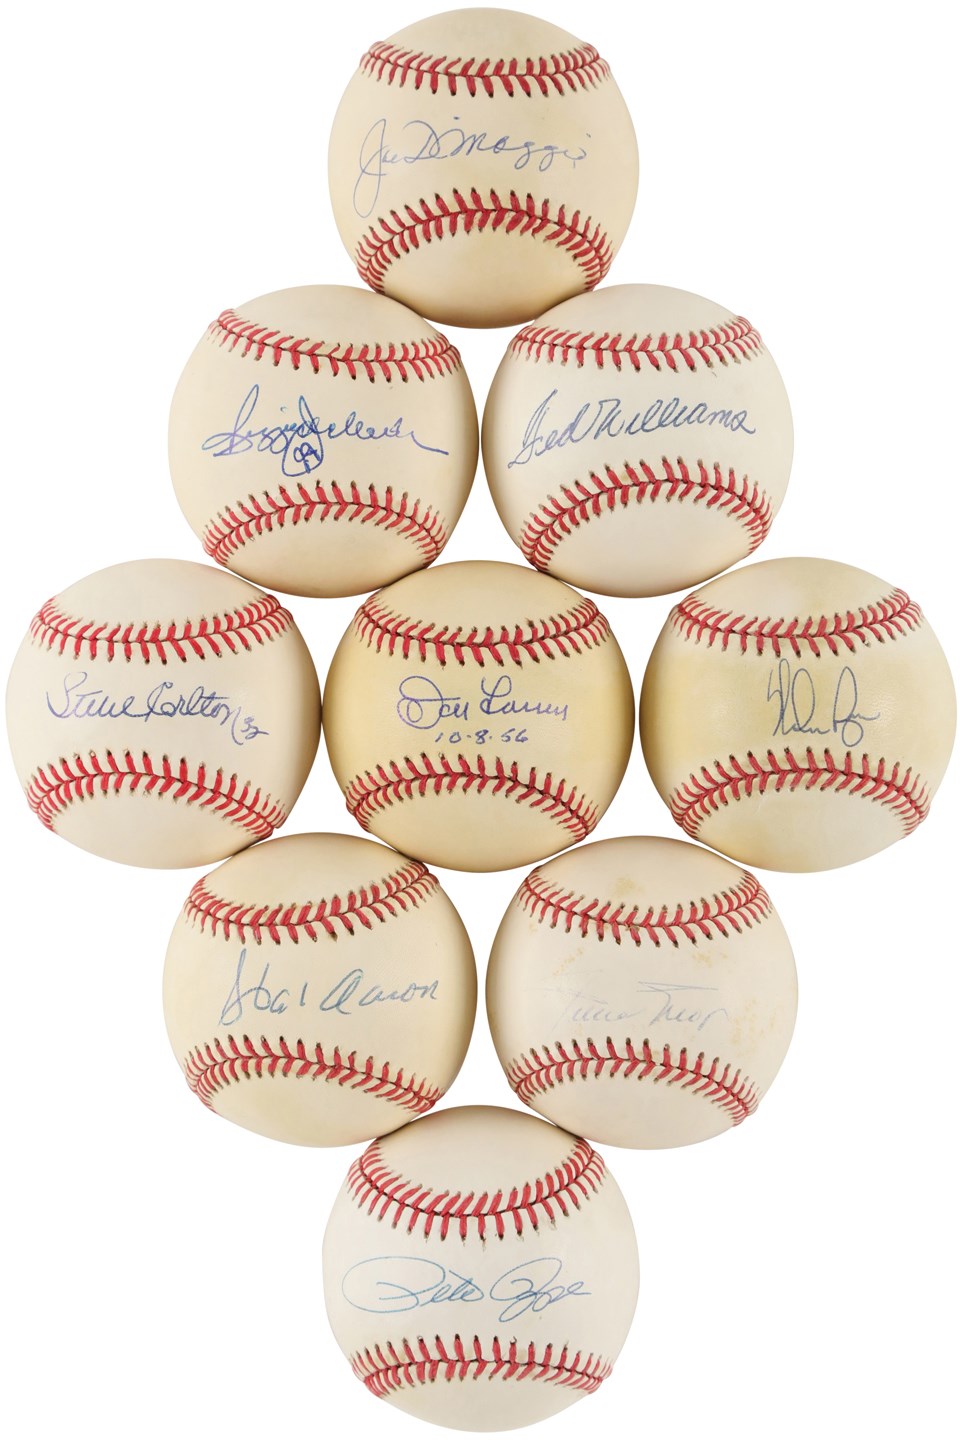 Baseball Autographs - 100 Plus Signed Baseball Collection